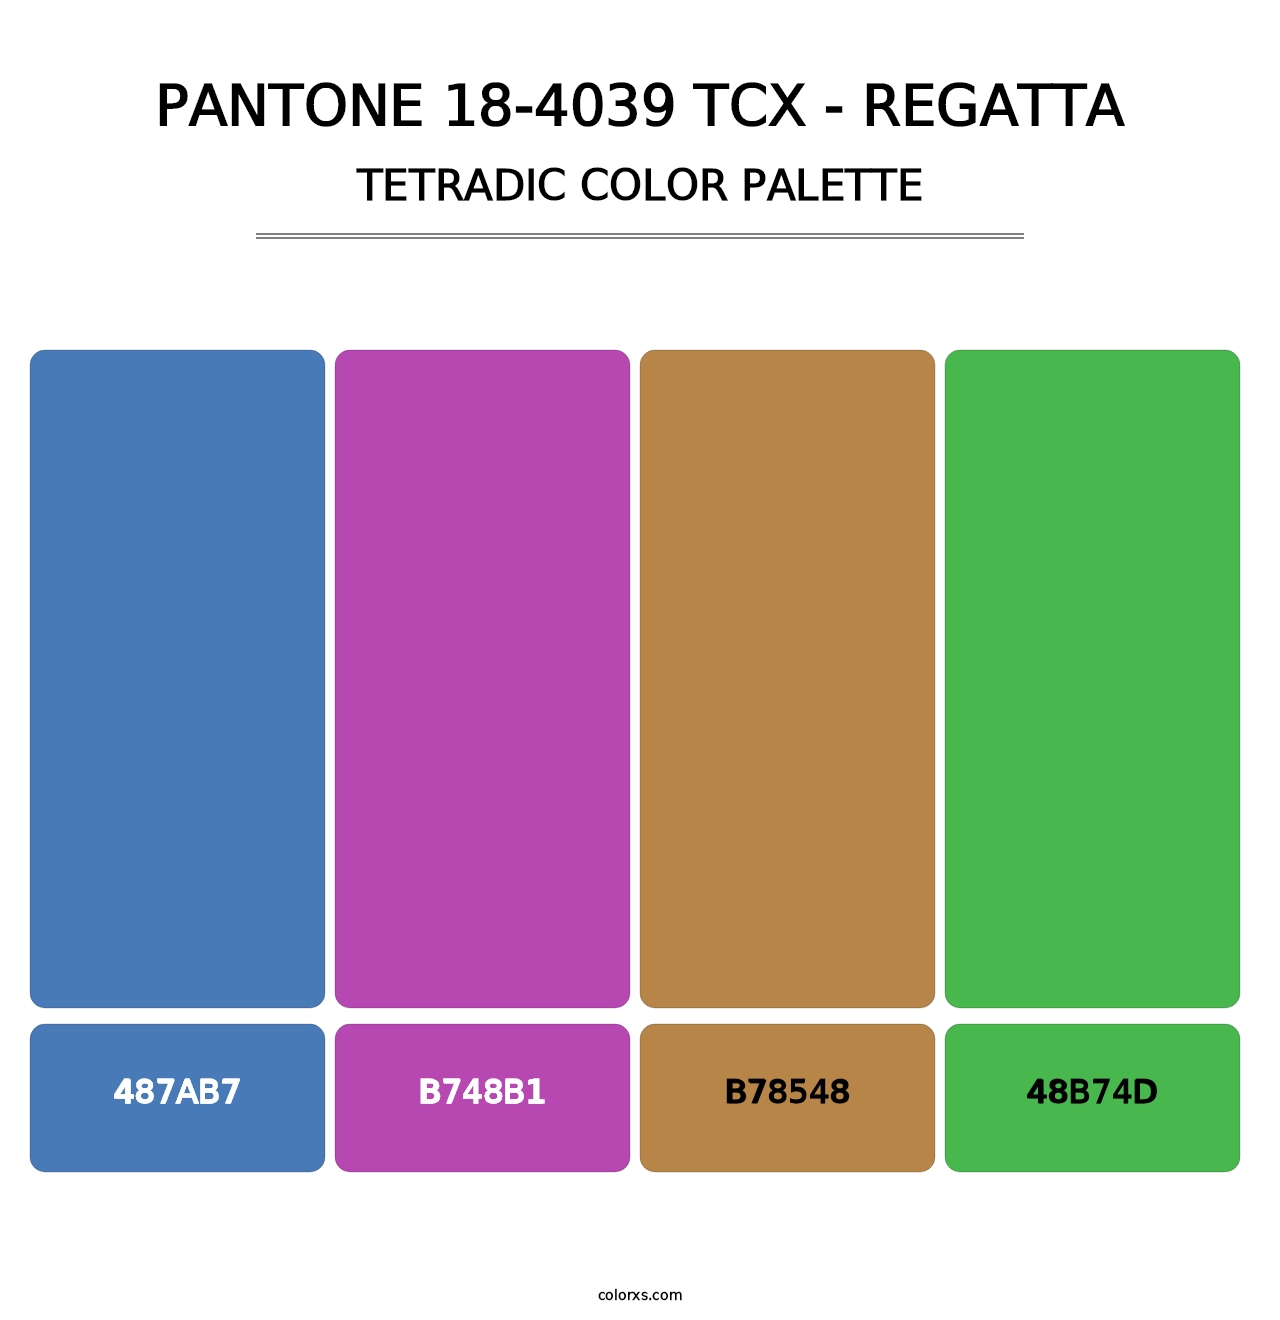 PANTONE 18-4039 TCX - Regatta - Tetradic Color Palette